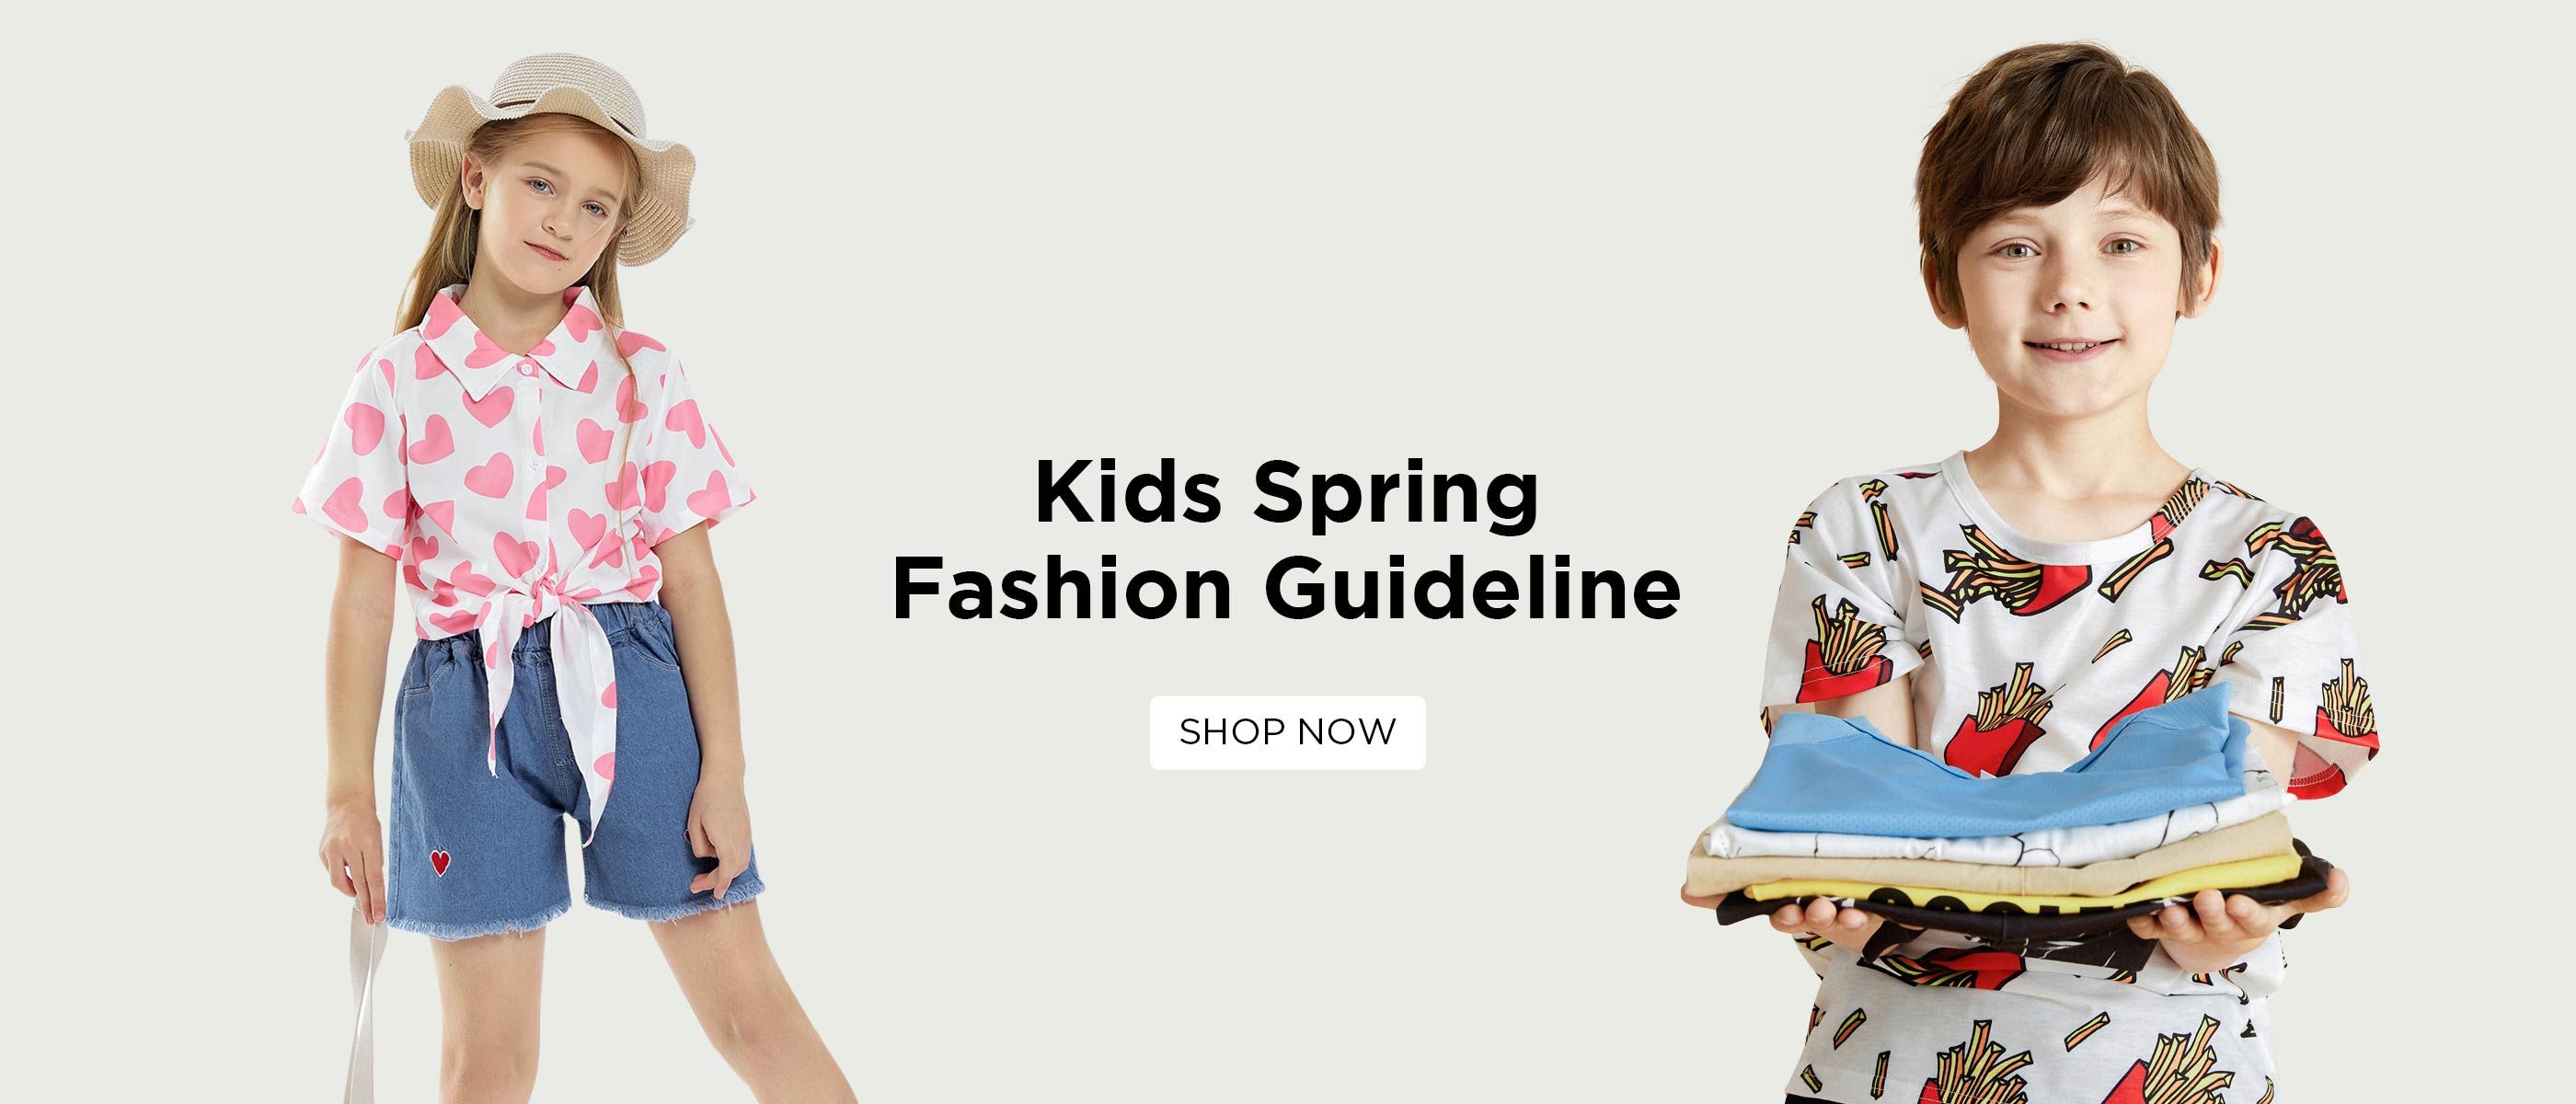 Kids Spring Fashion Guideline